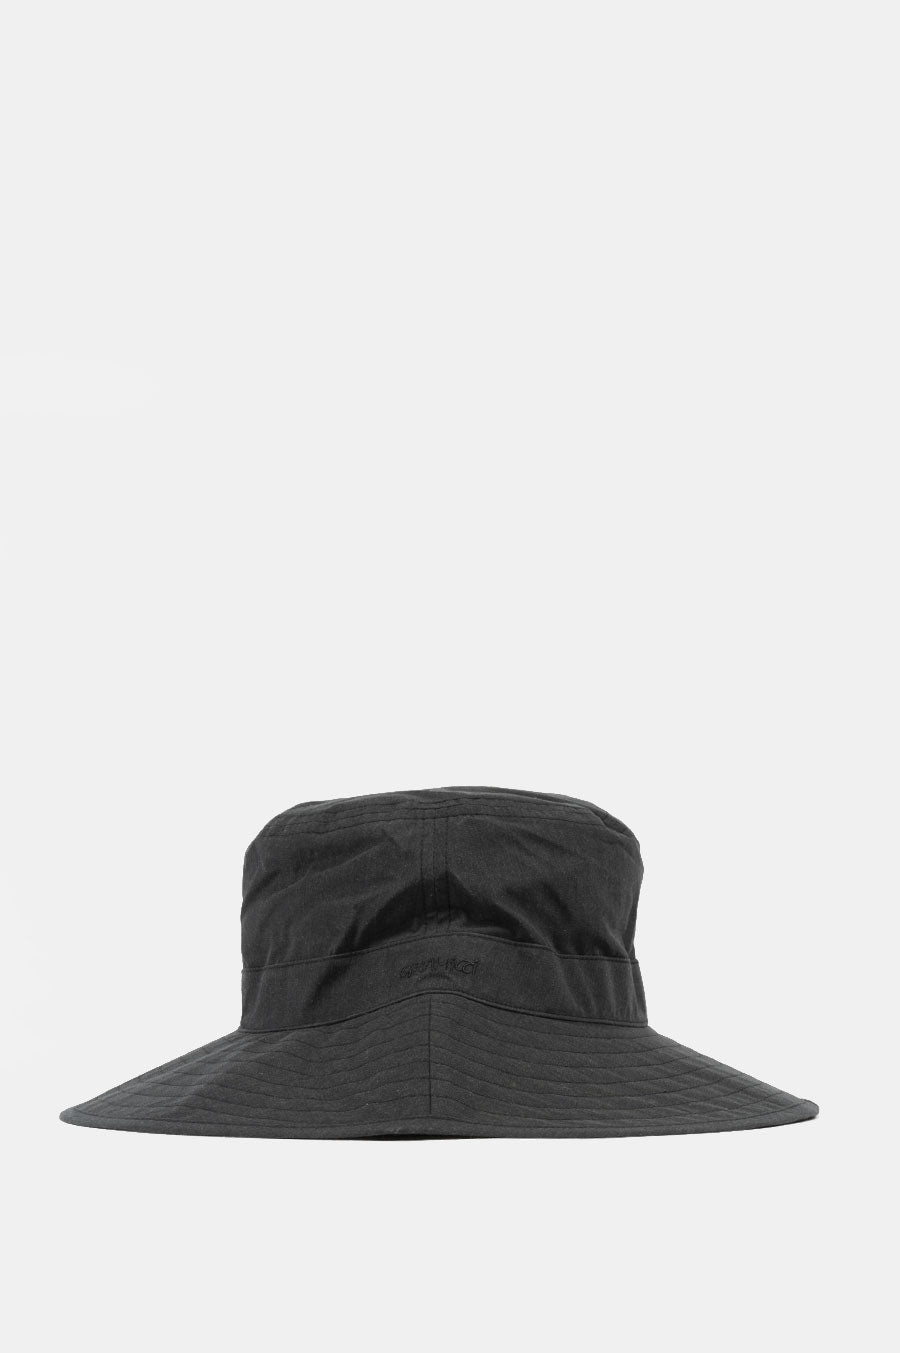 STUSSY FAIRISLE BUCKET HAT BROWN – BLENDS